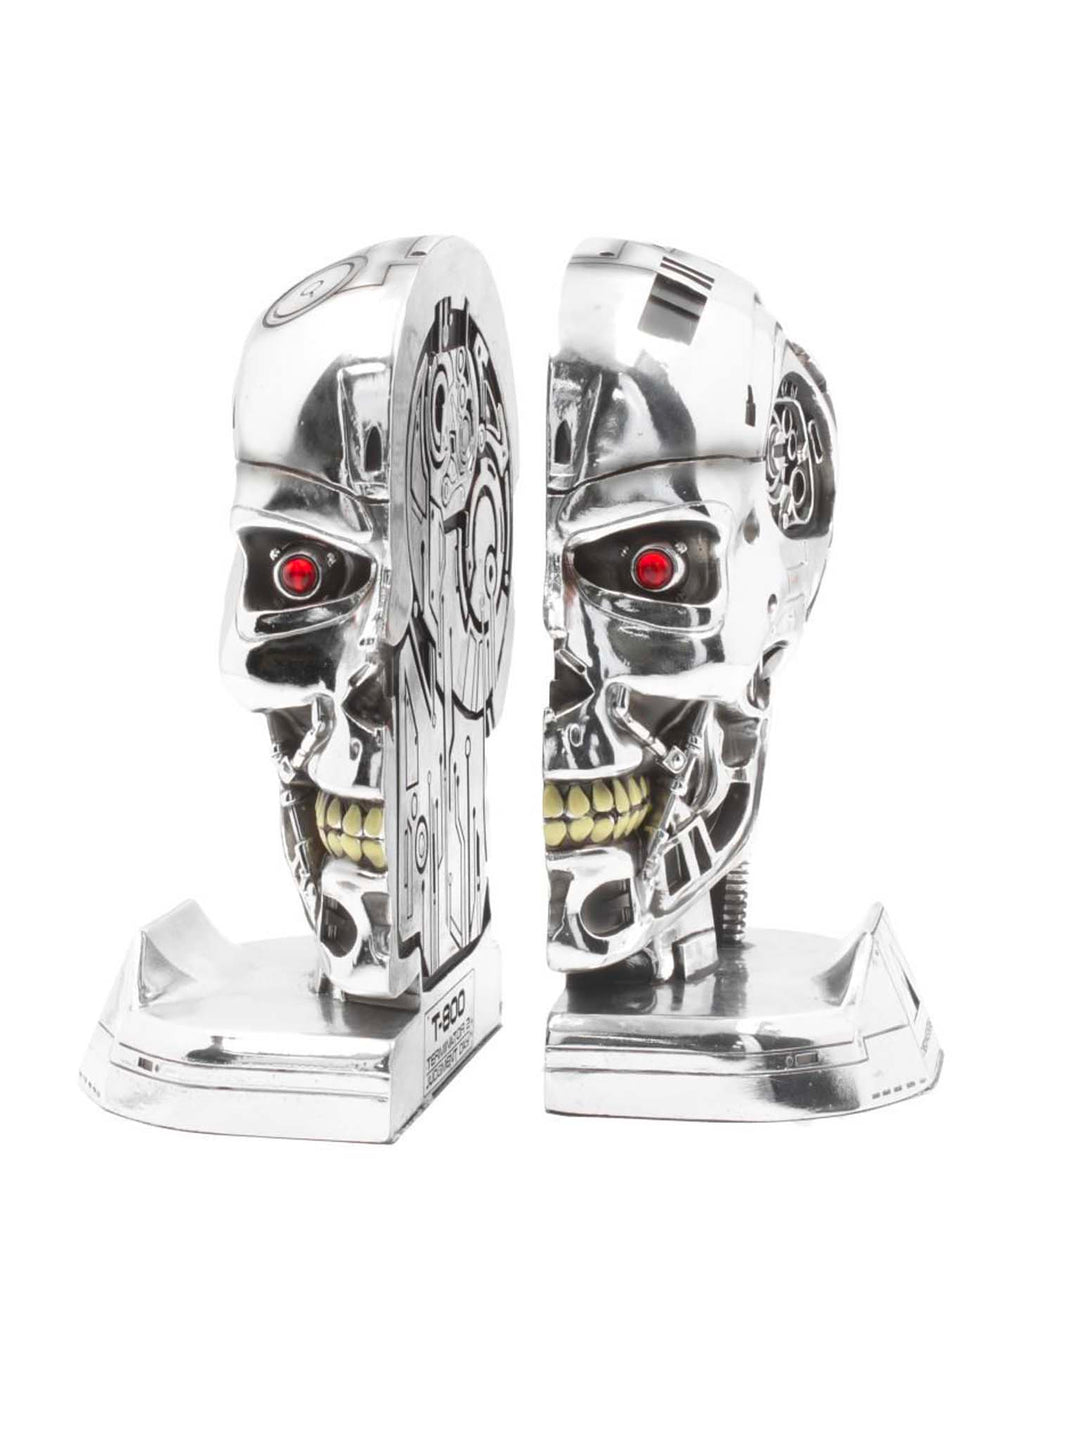 Officially licensed Terminator 2 robotic head bookends, Terminator 2, Robotic Head Bookends, Terminator